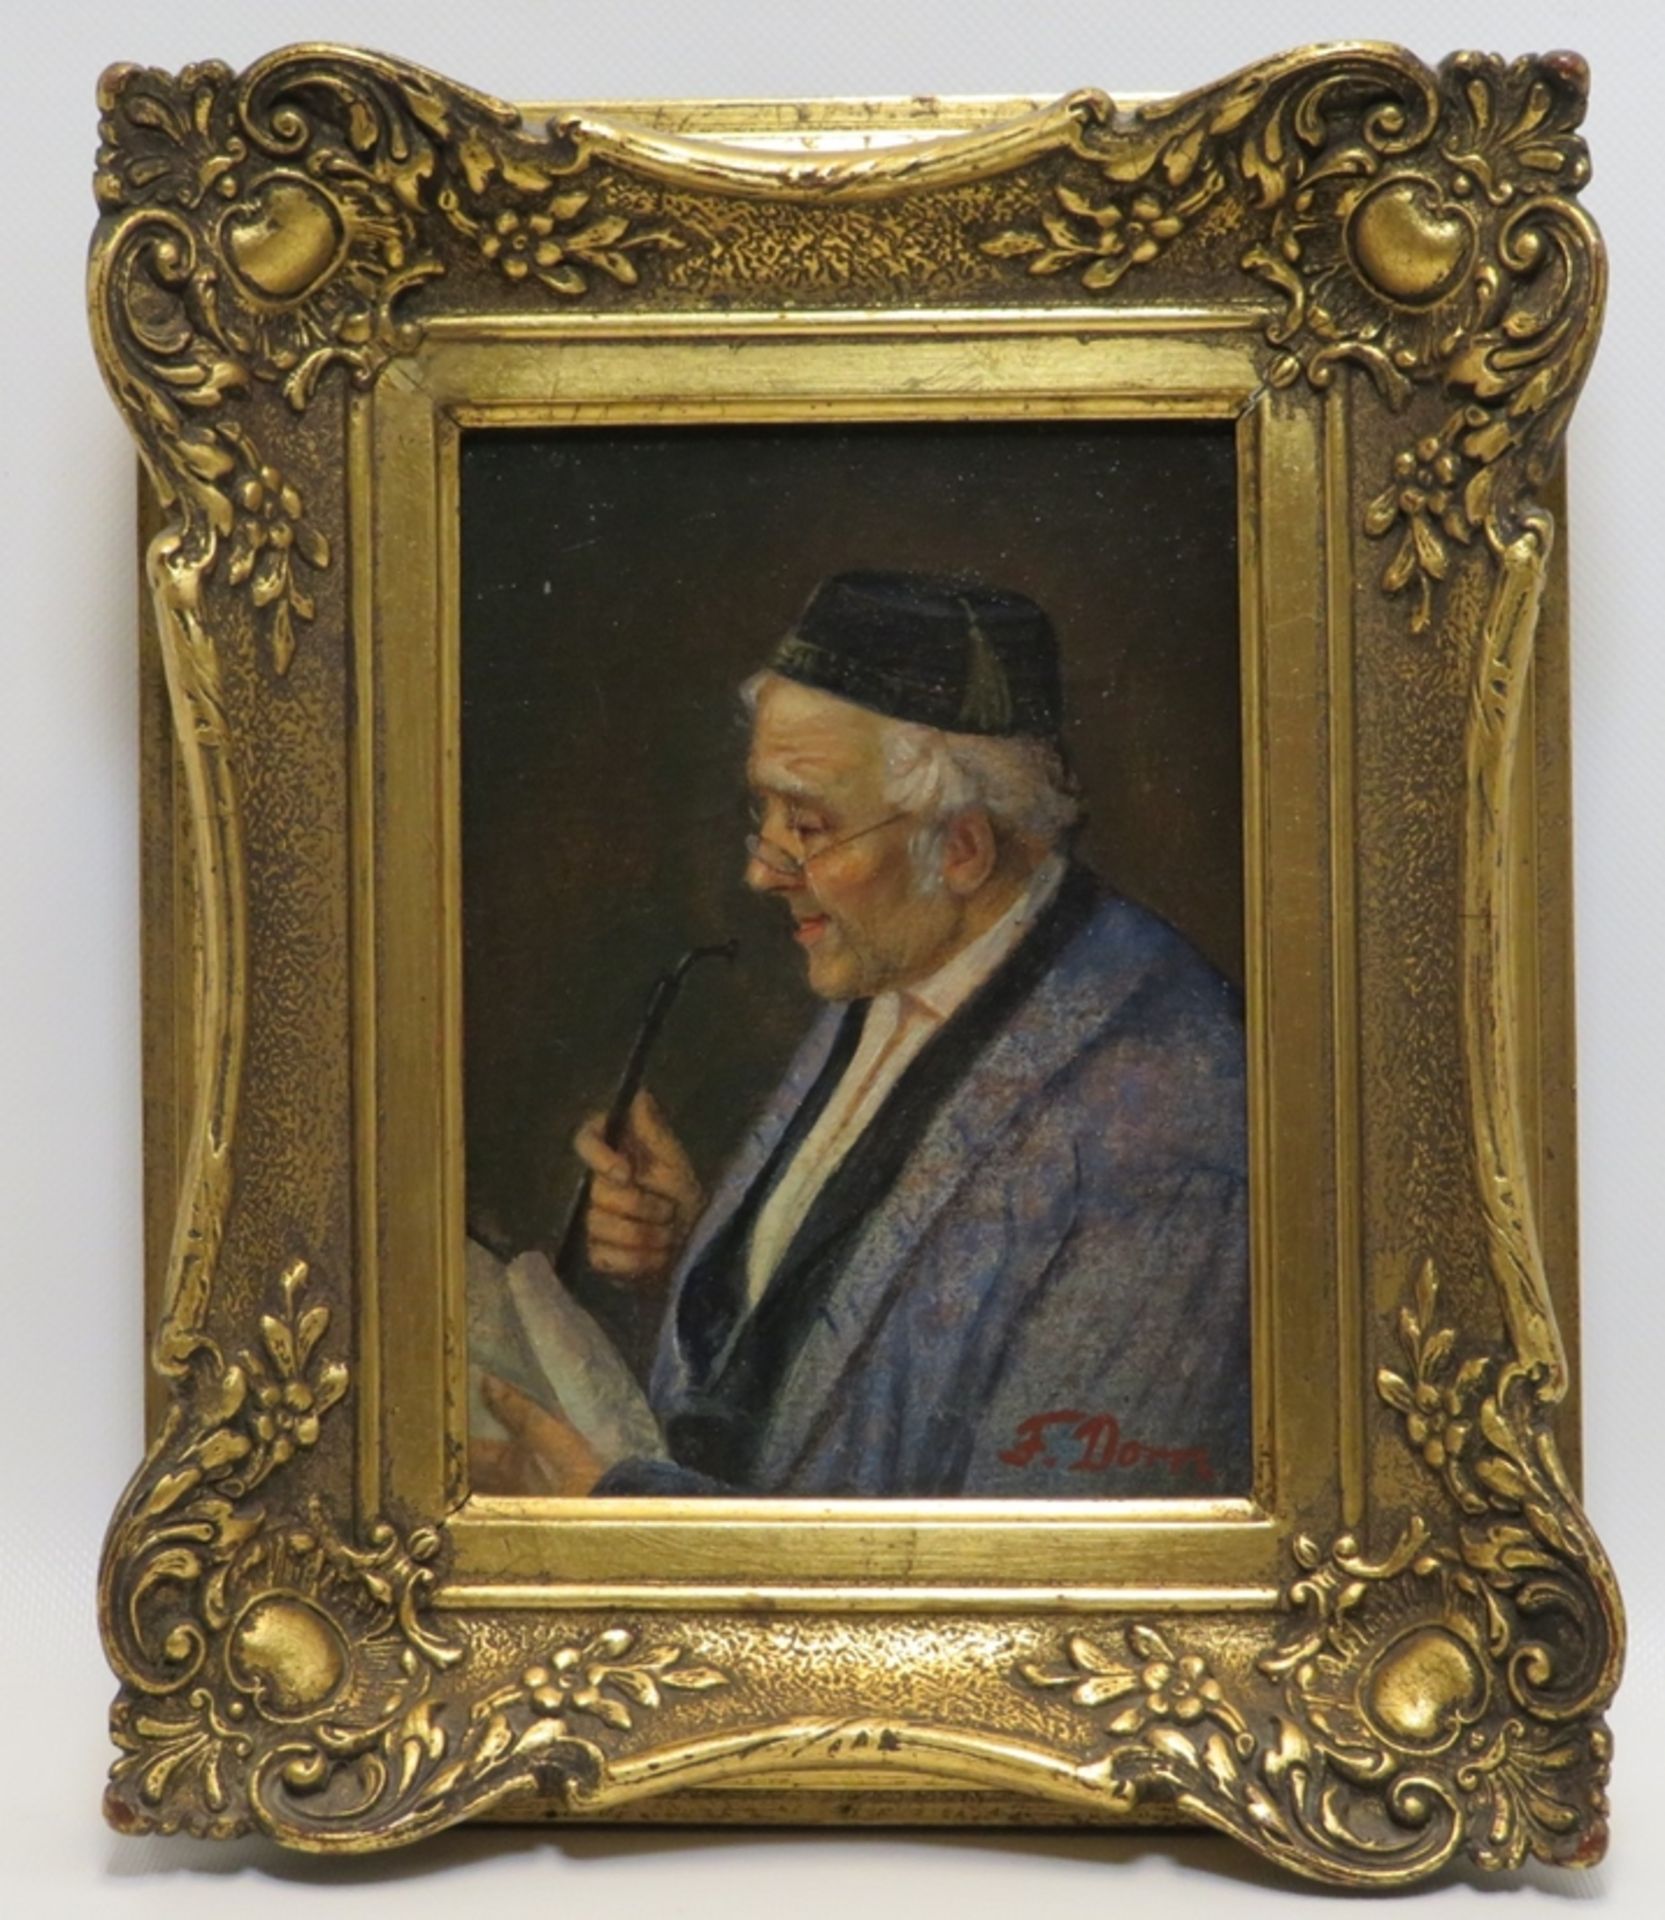 Dorn, F., 1. Hälfte 20. Jahrhundert, "Männerporträt mit Pfeife", re.u.sign., Öl